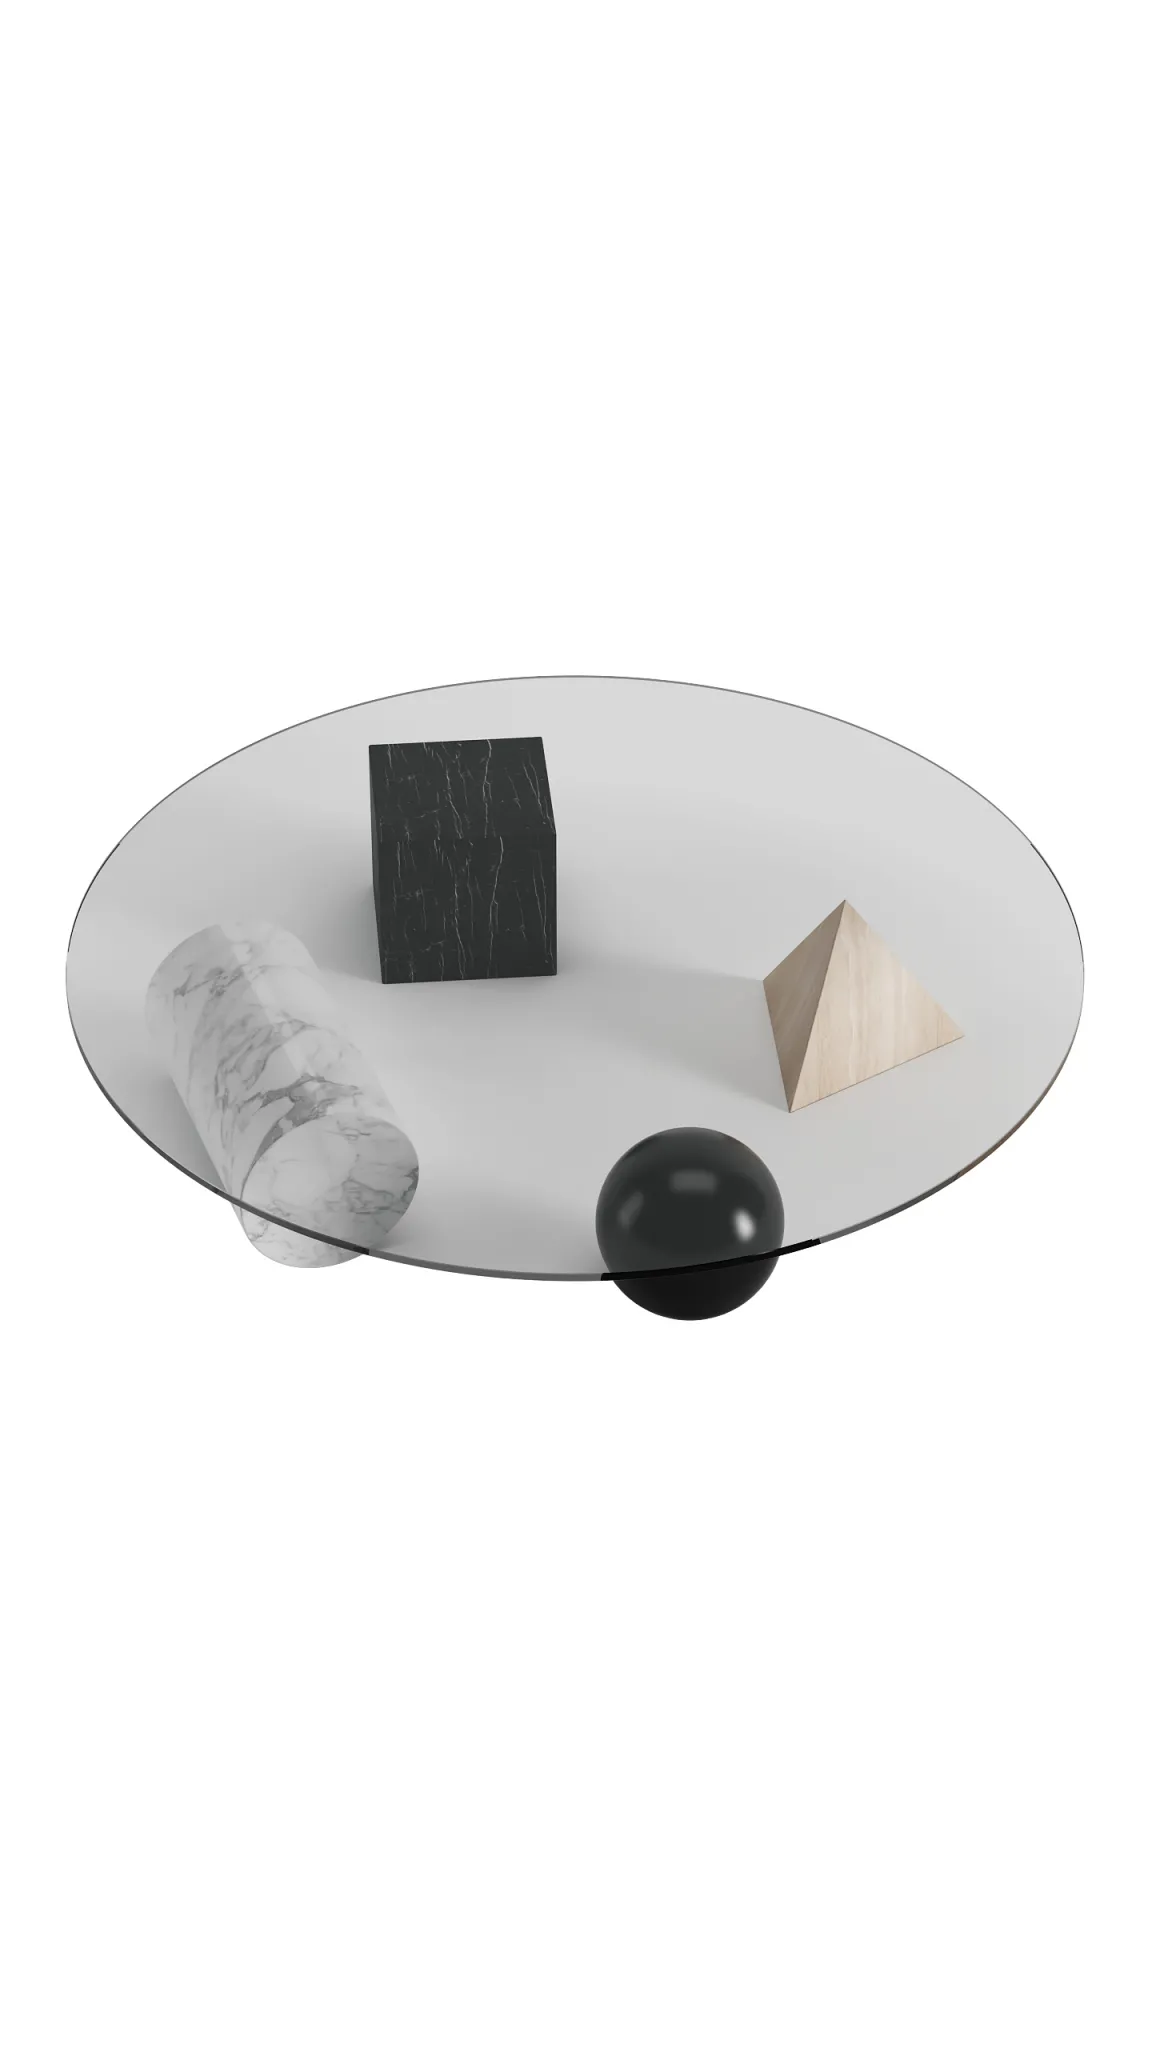 FURNITURE 3D MODELS – TABLES – 0081